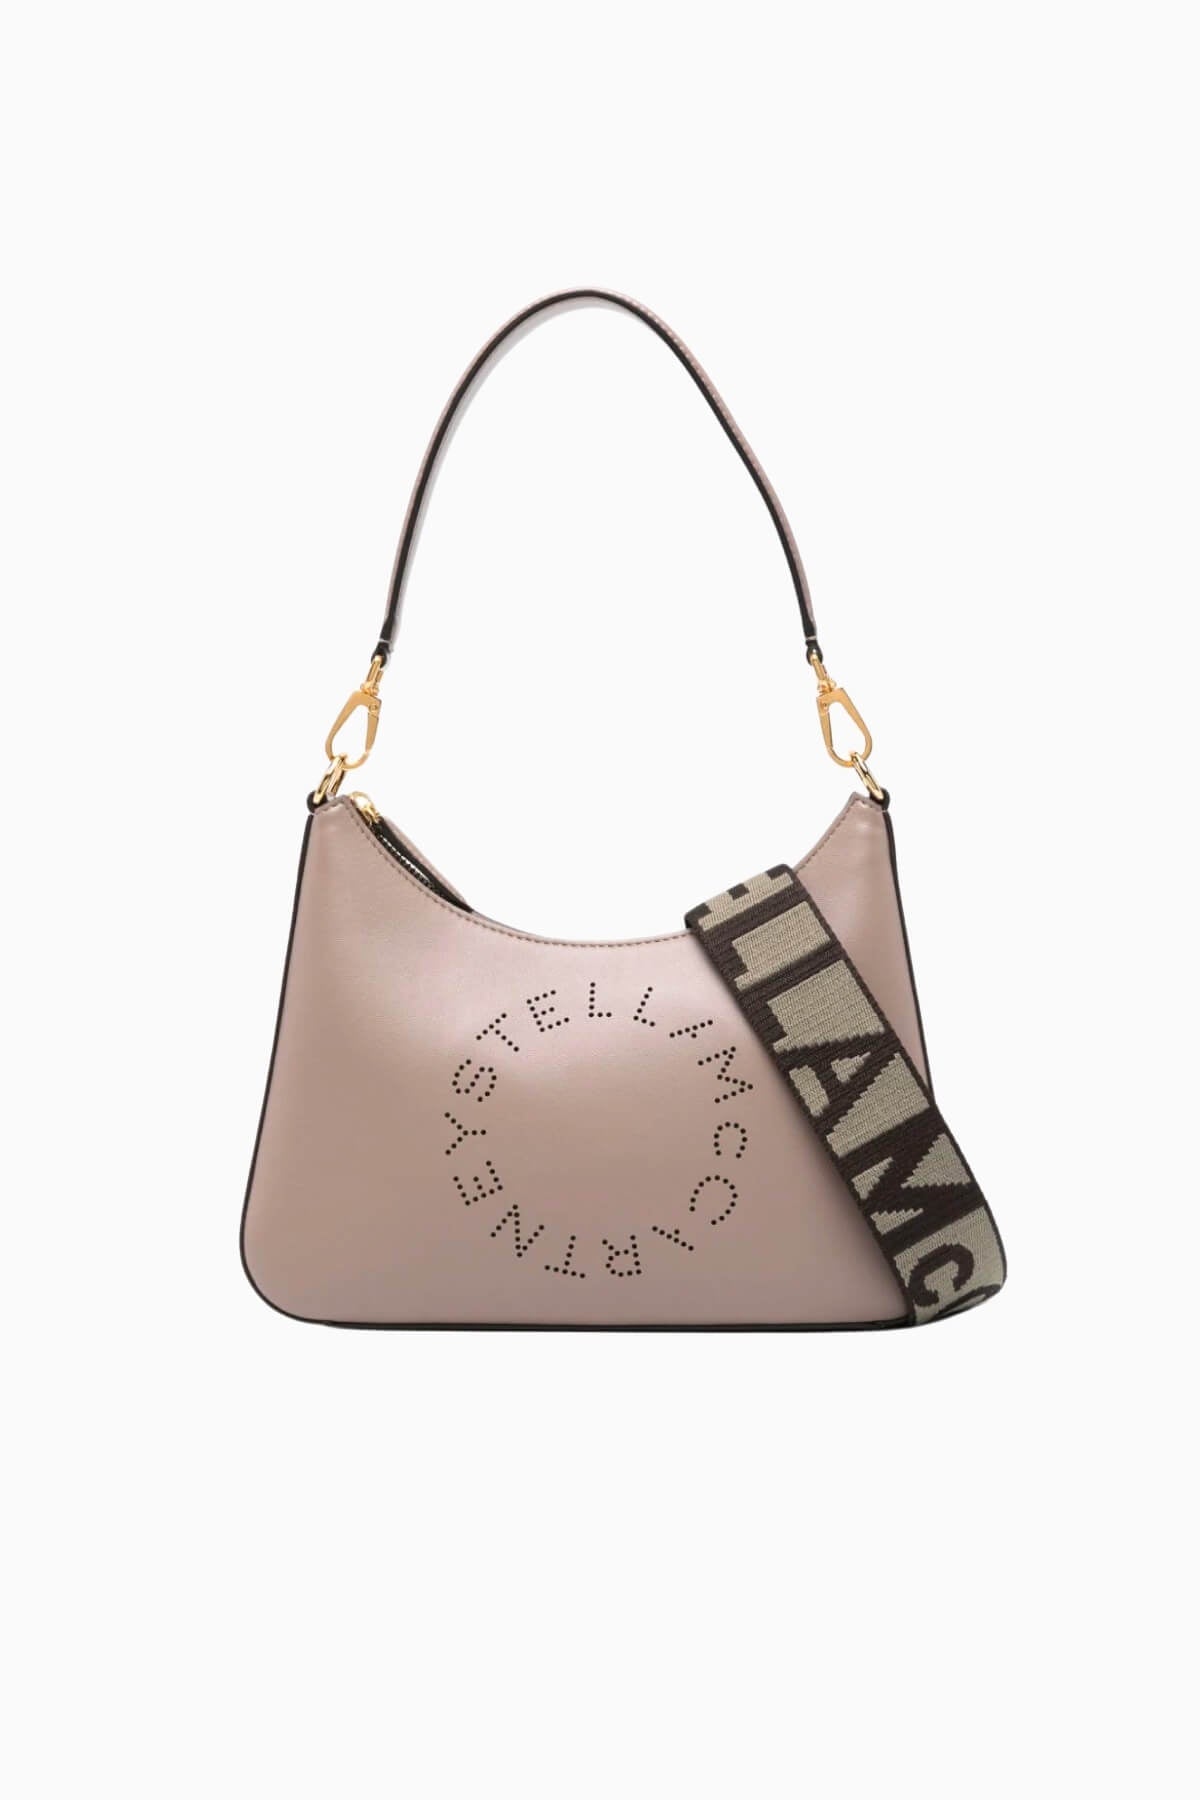 Stella McCartney Logo Shoulder Bag - Moss